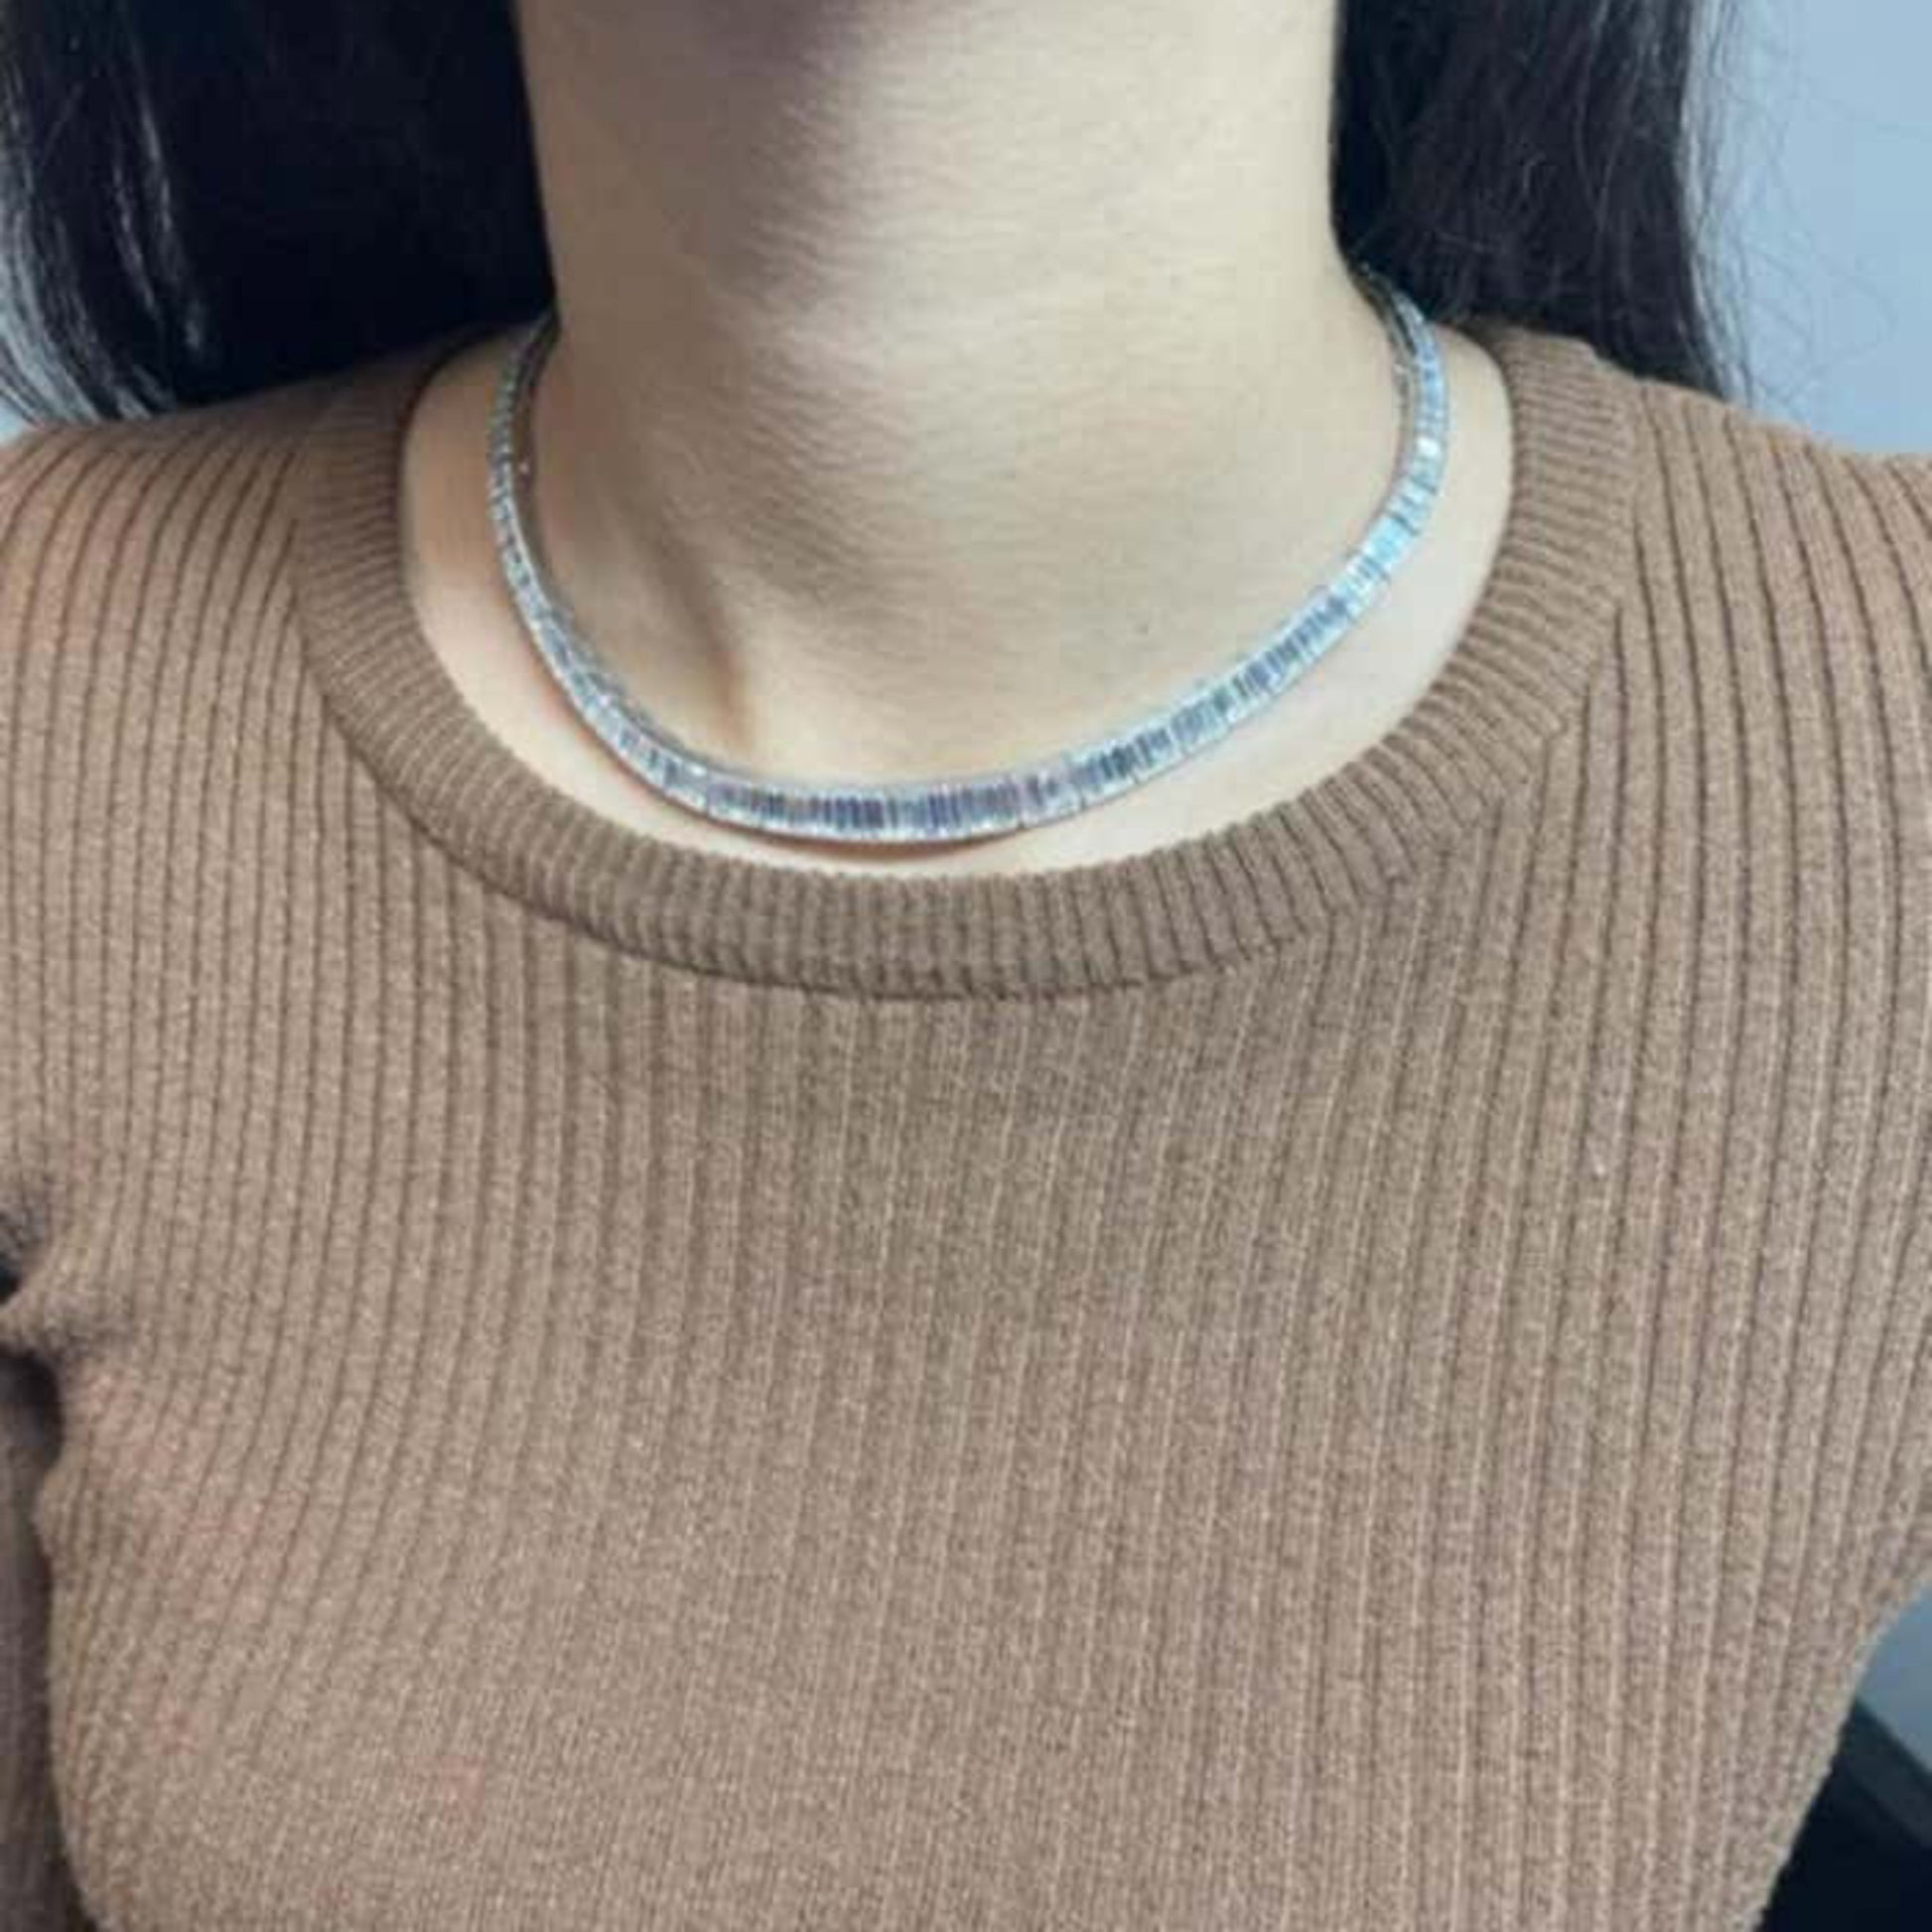 1950s Platinum Diamond Necklace/Bracelet worn on neck